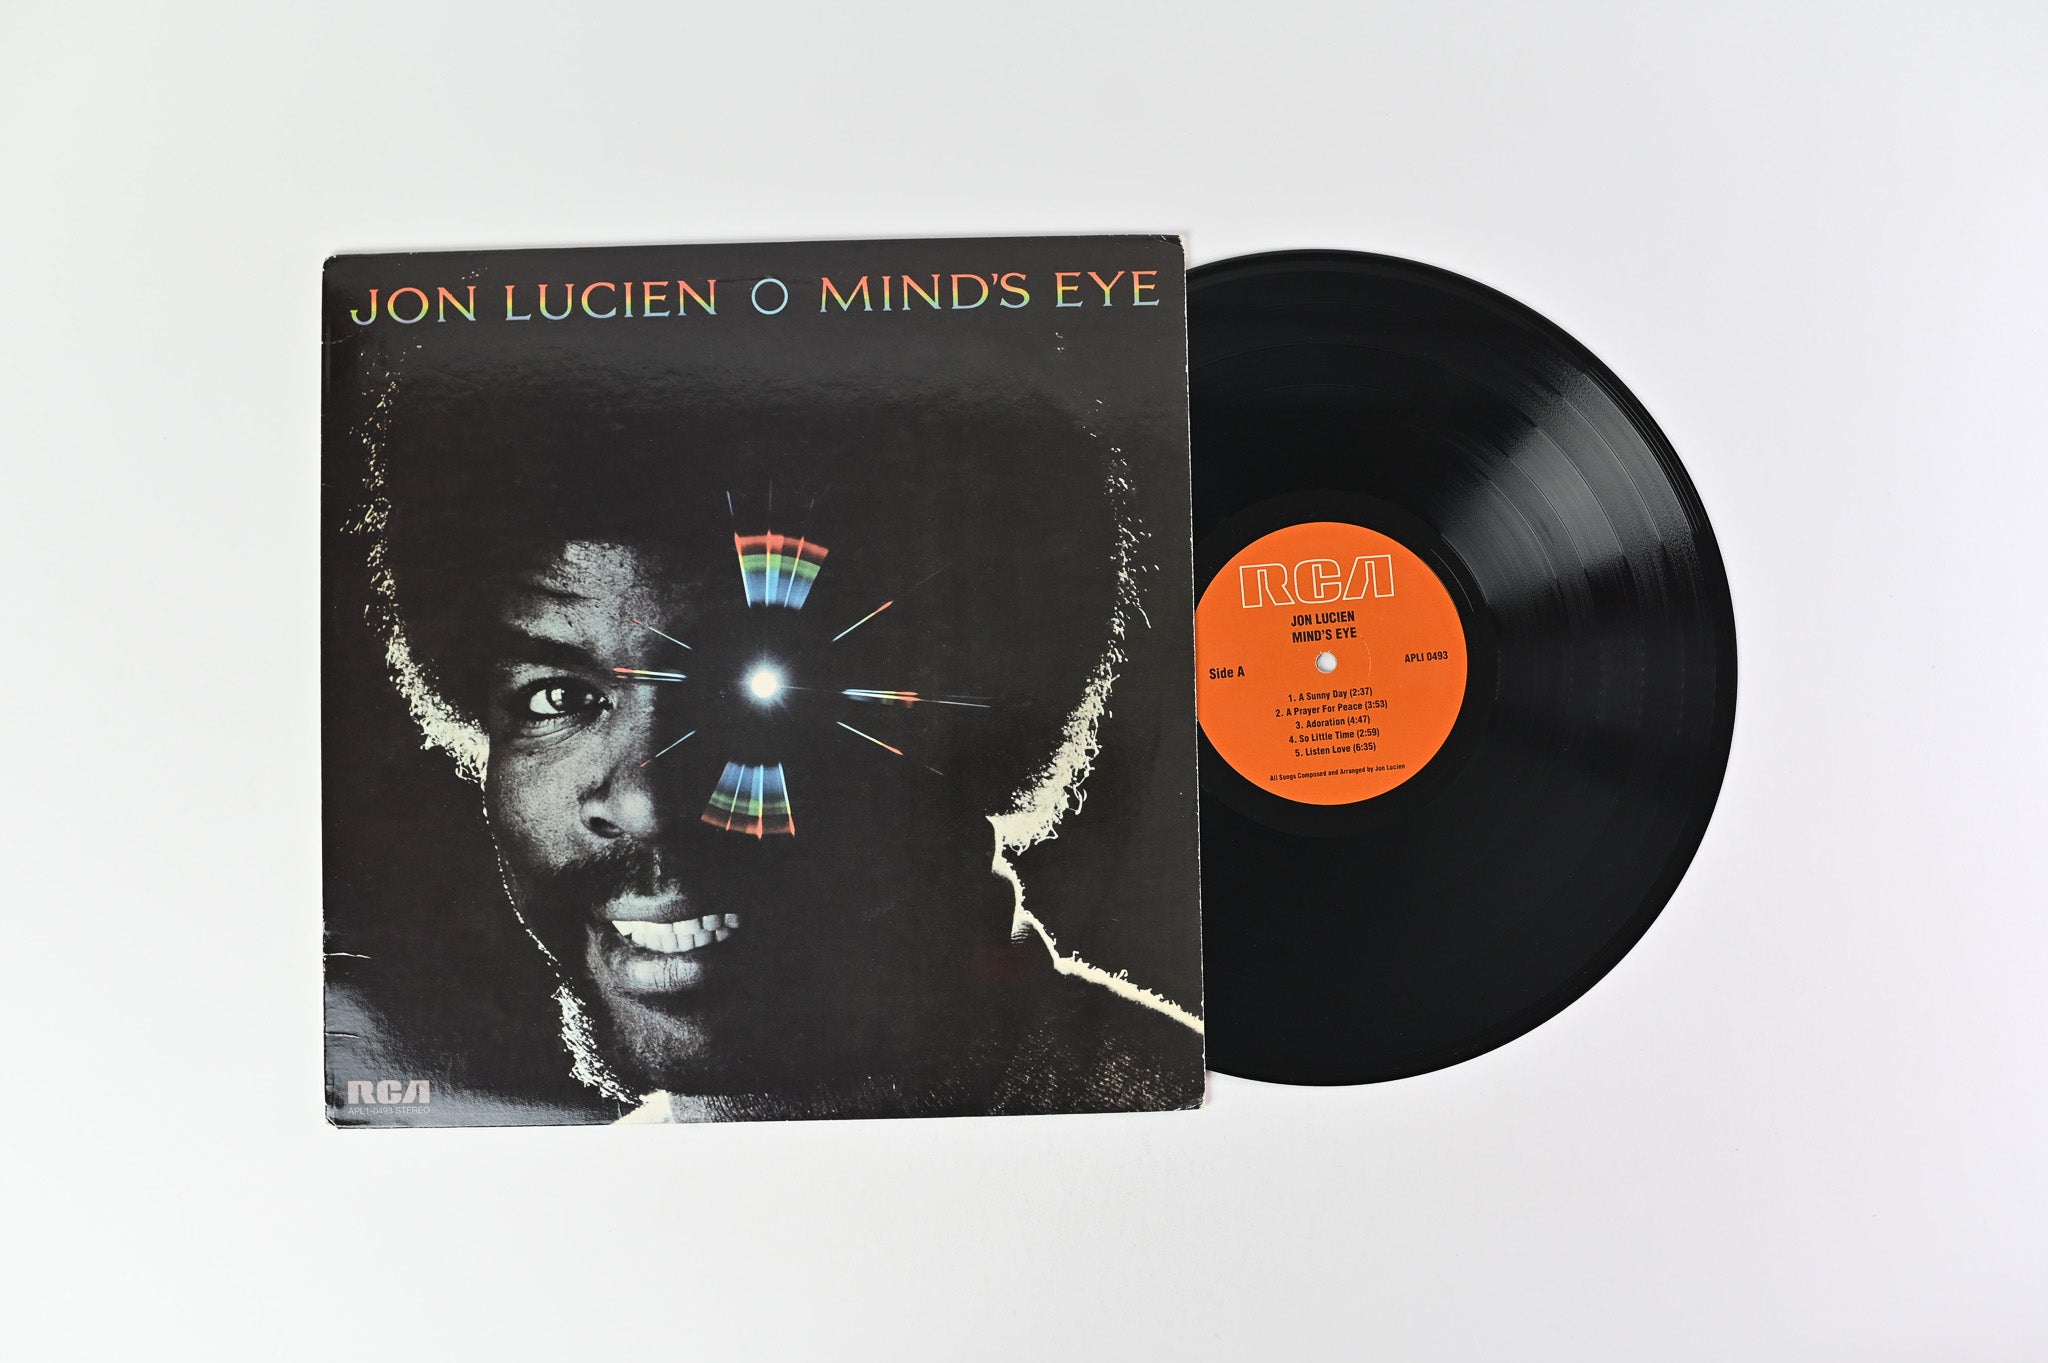 Jon Lucien - Mind's Eye on RCA Reissue